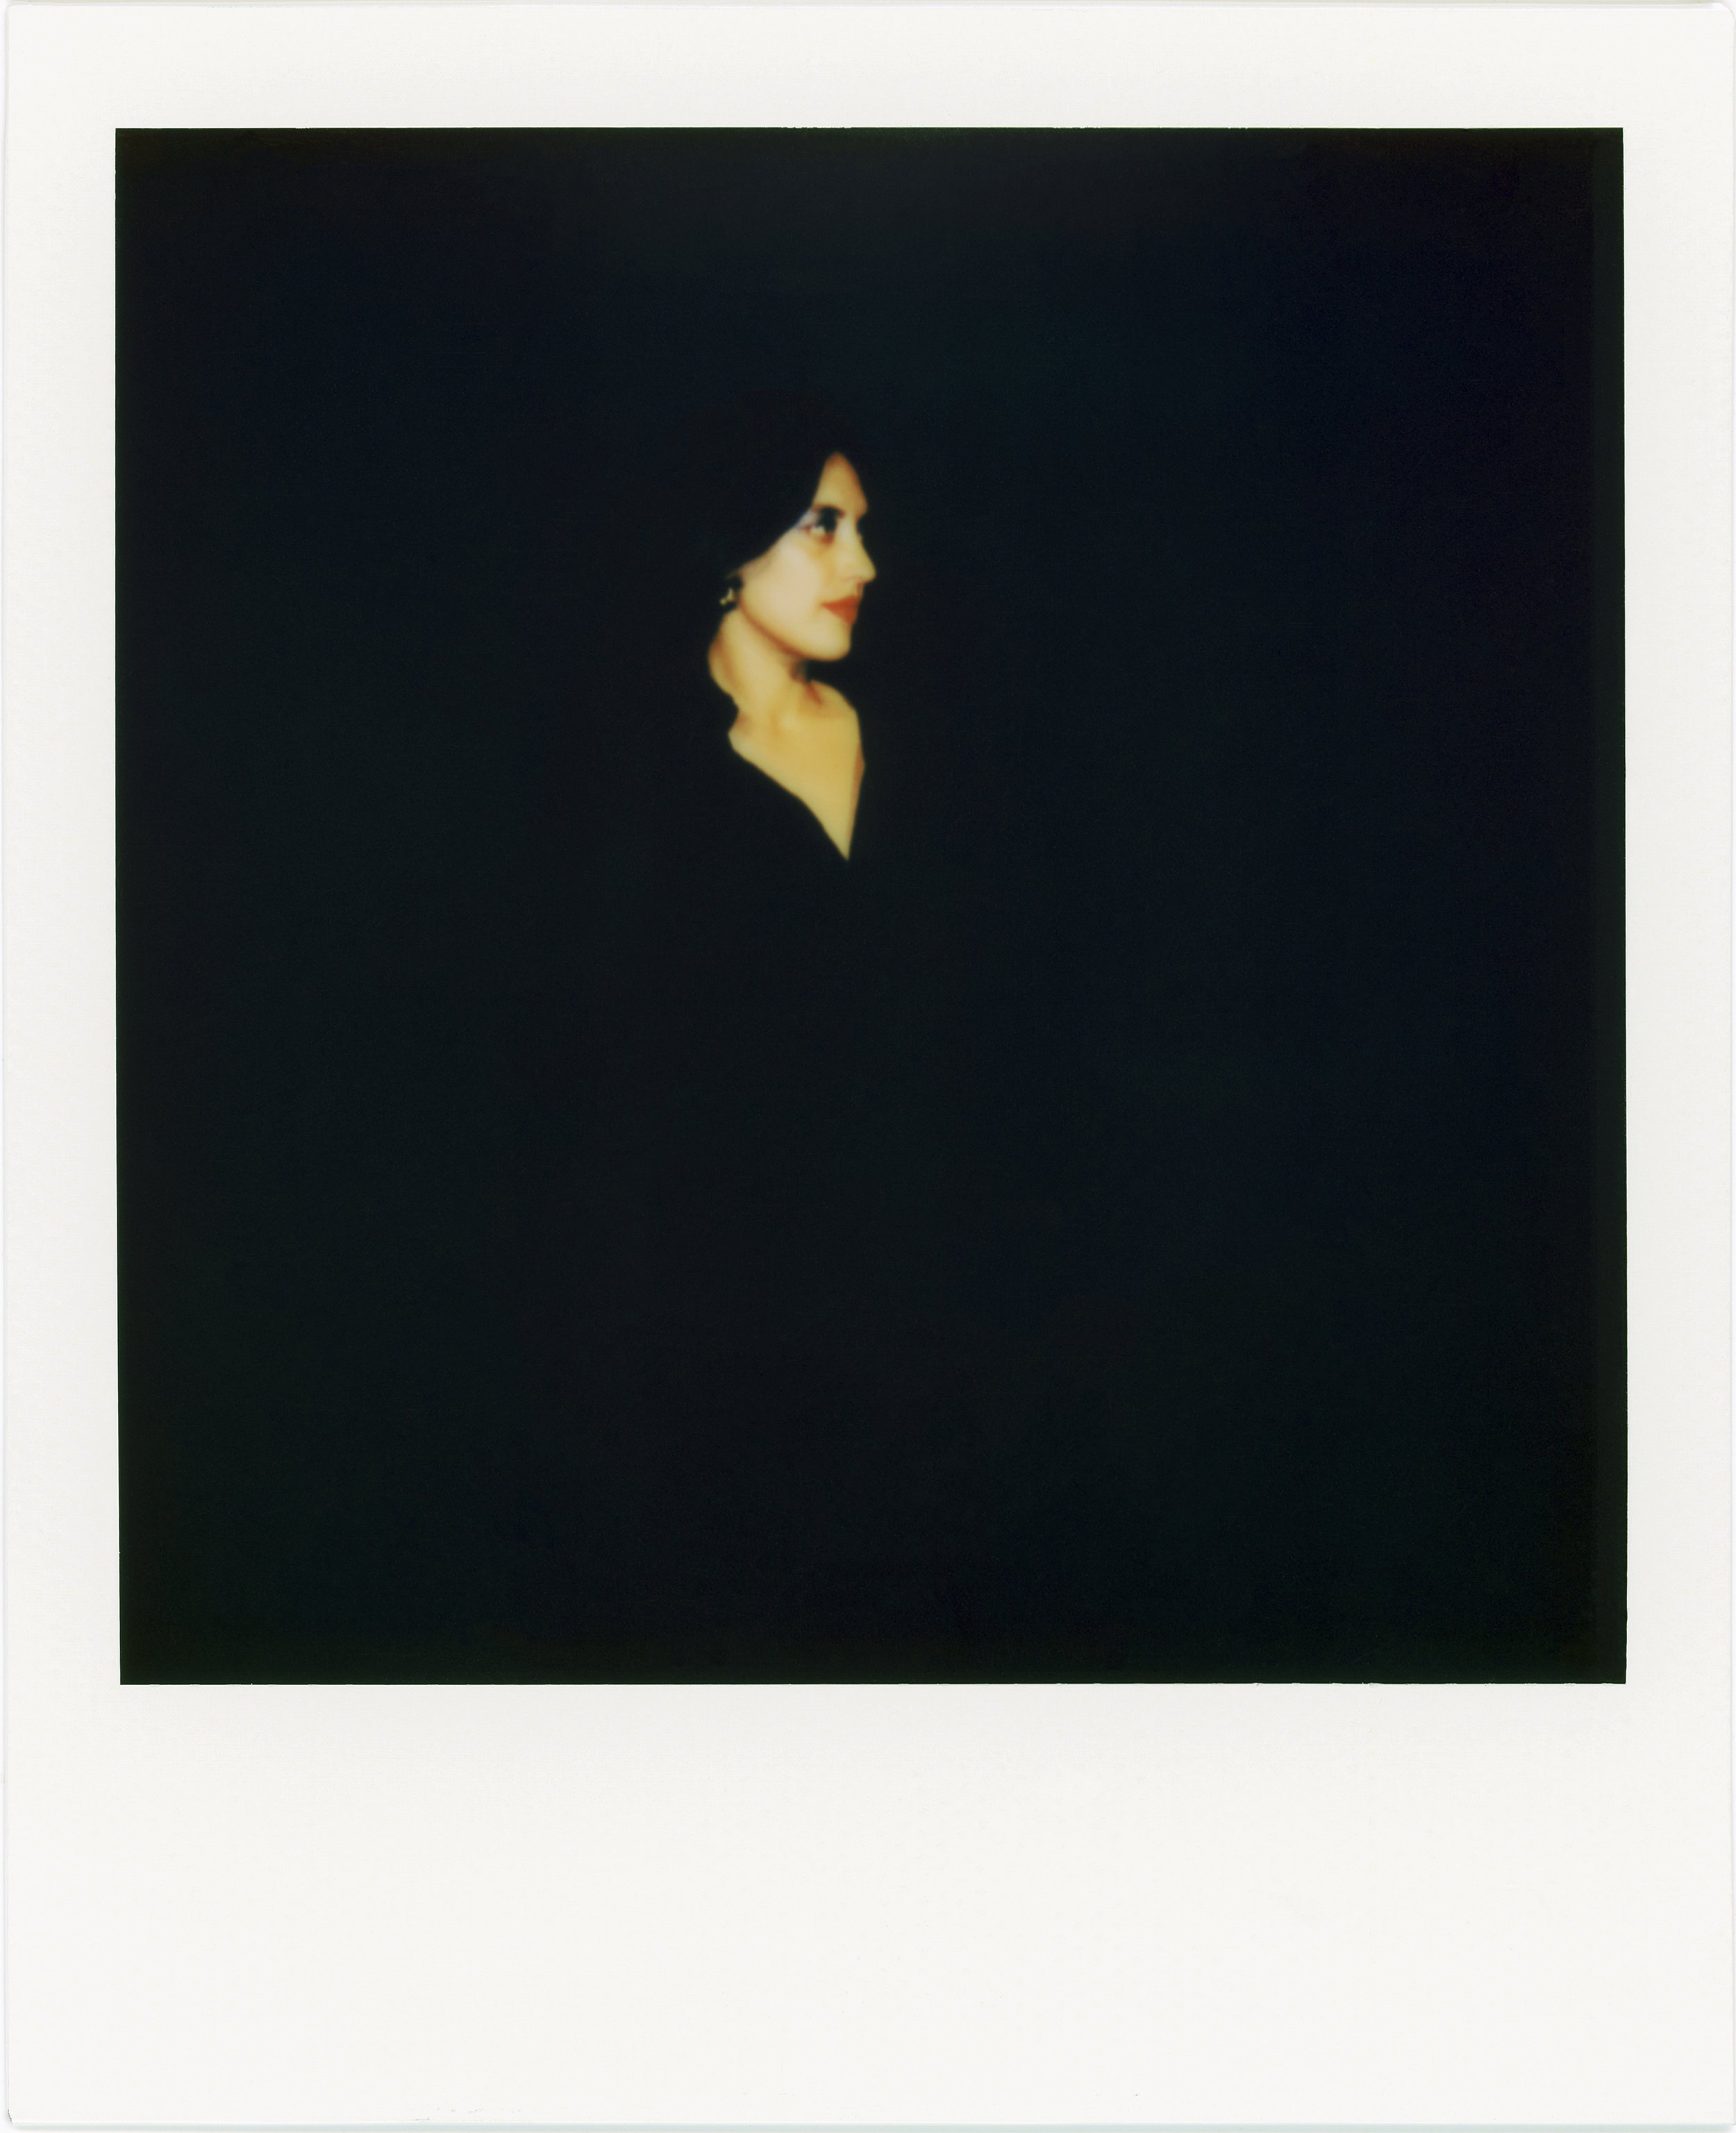 Amanda Polaroid 2.jpg